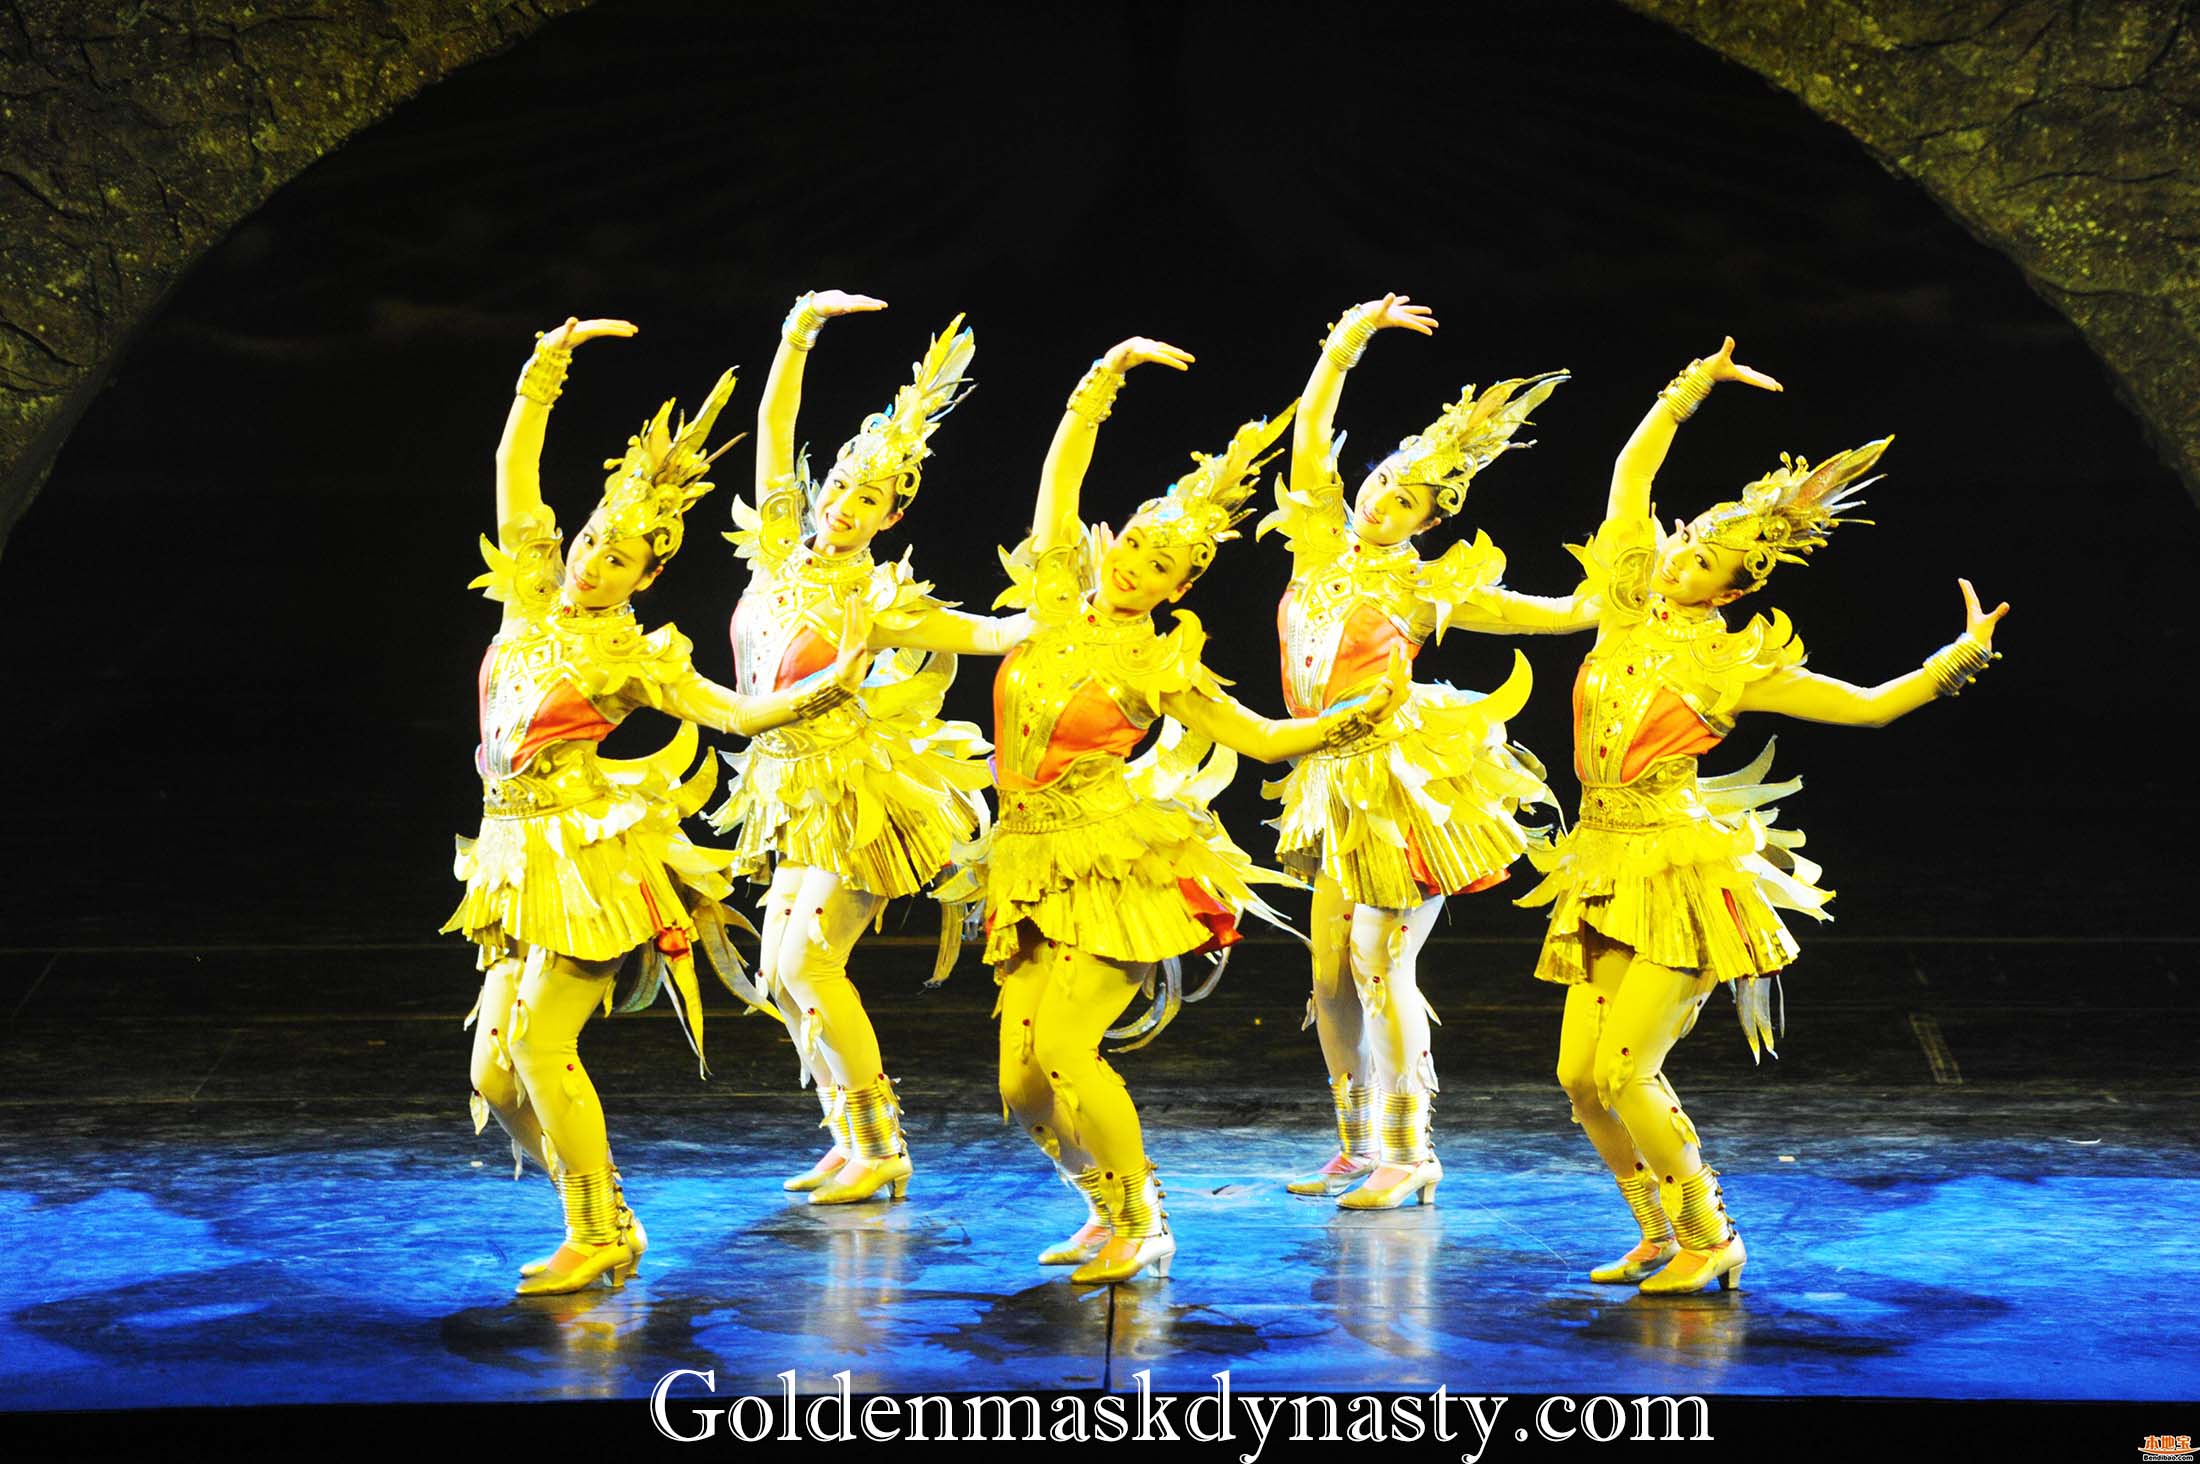 the golden mask dynasty china, Golden mask dynasty show, golden